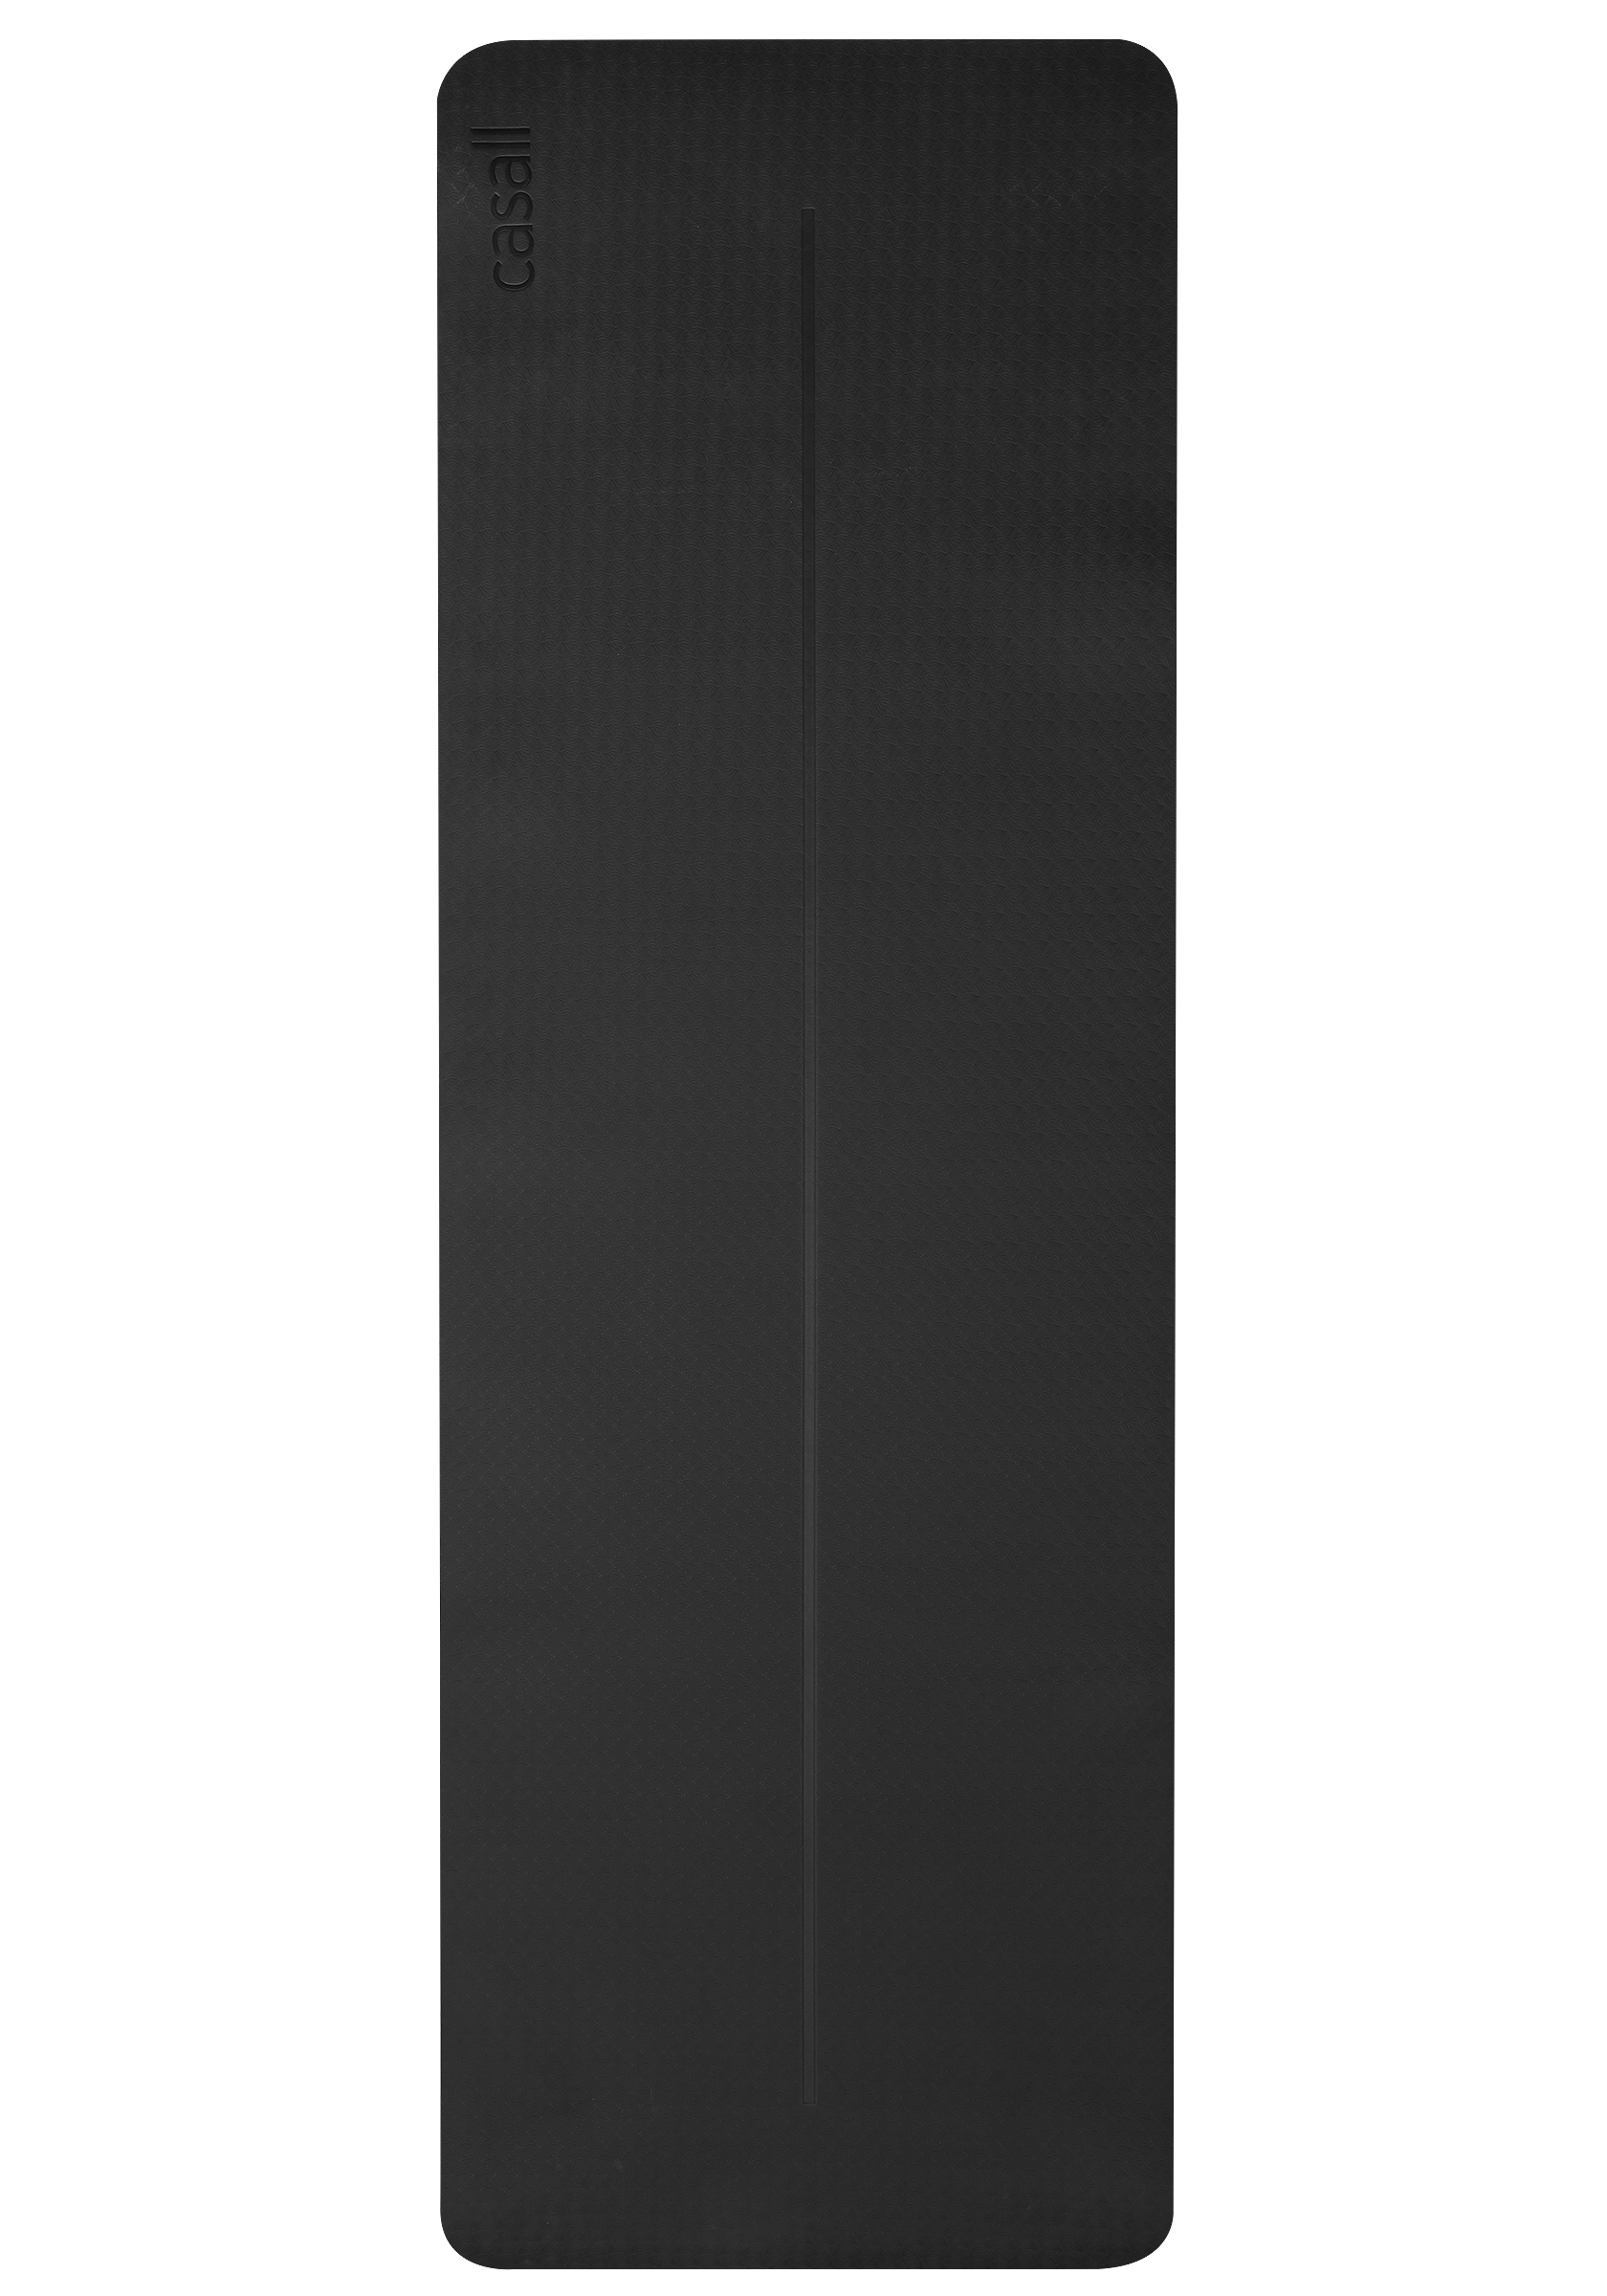 Casall Yoga Mat Grip & Cushion II - 5 mm Black/Tropical Blue o/s :  : Sports & Outdoors